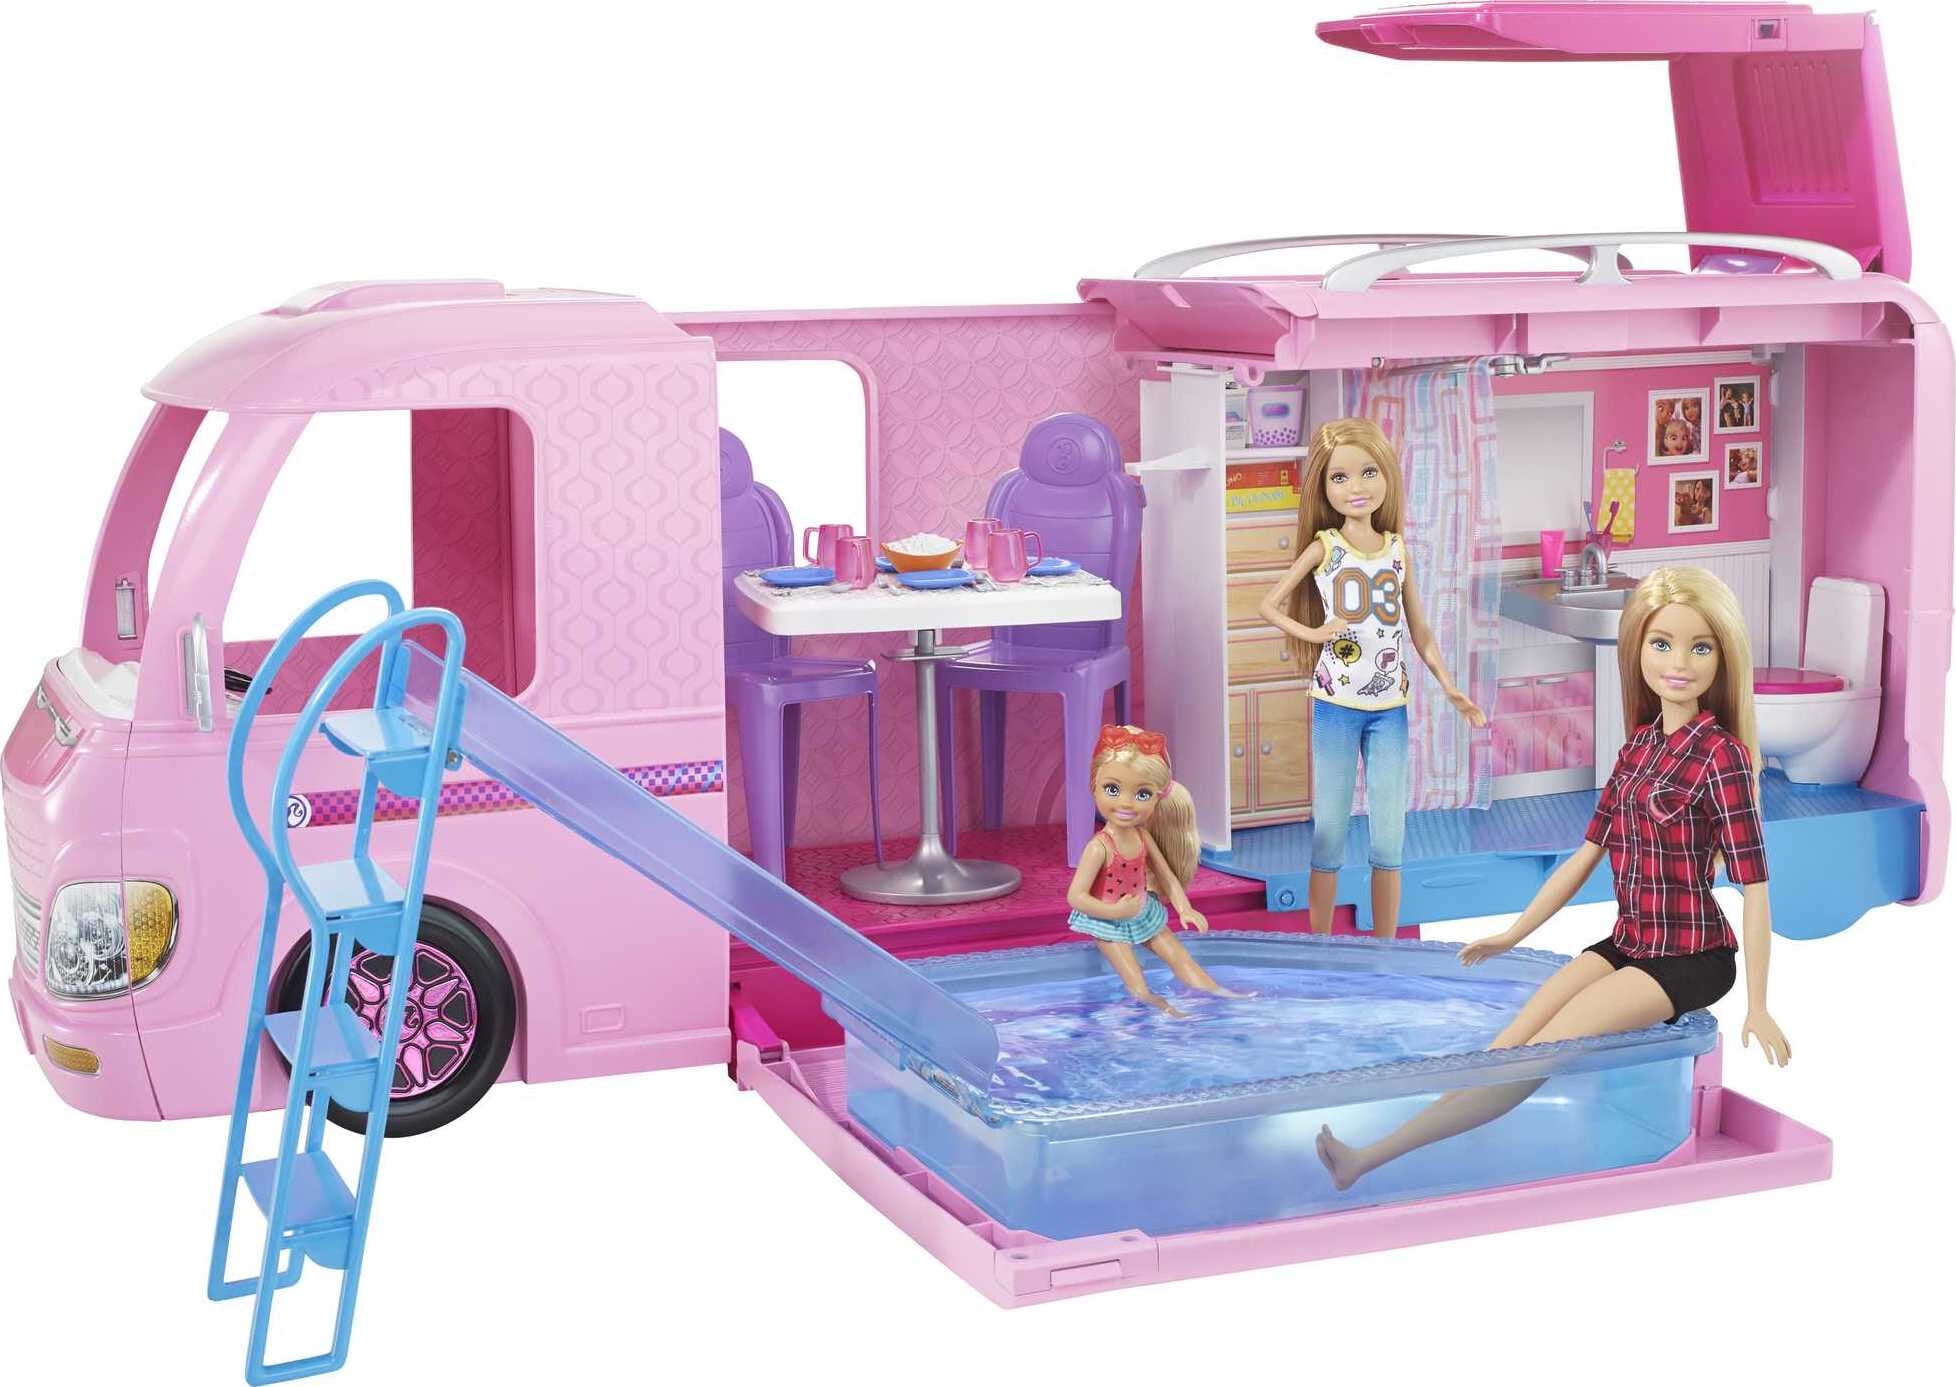 Barbie Pop-Up Camper Playset